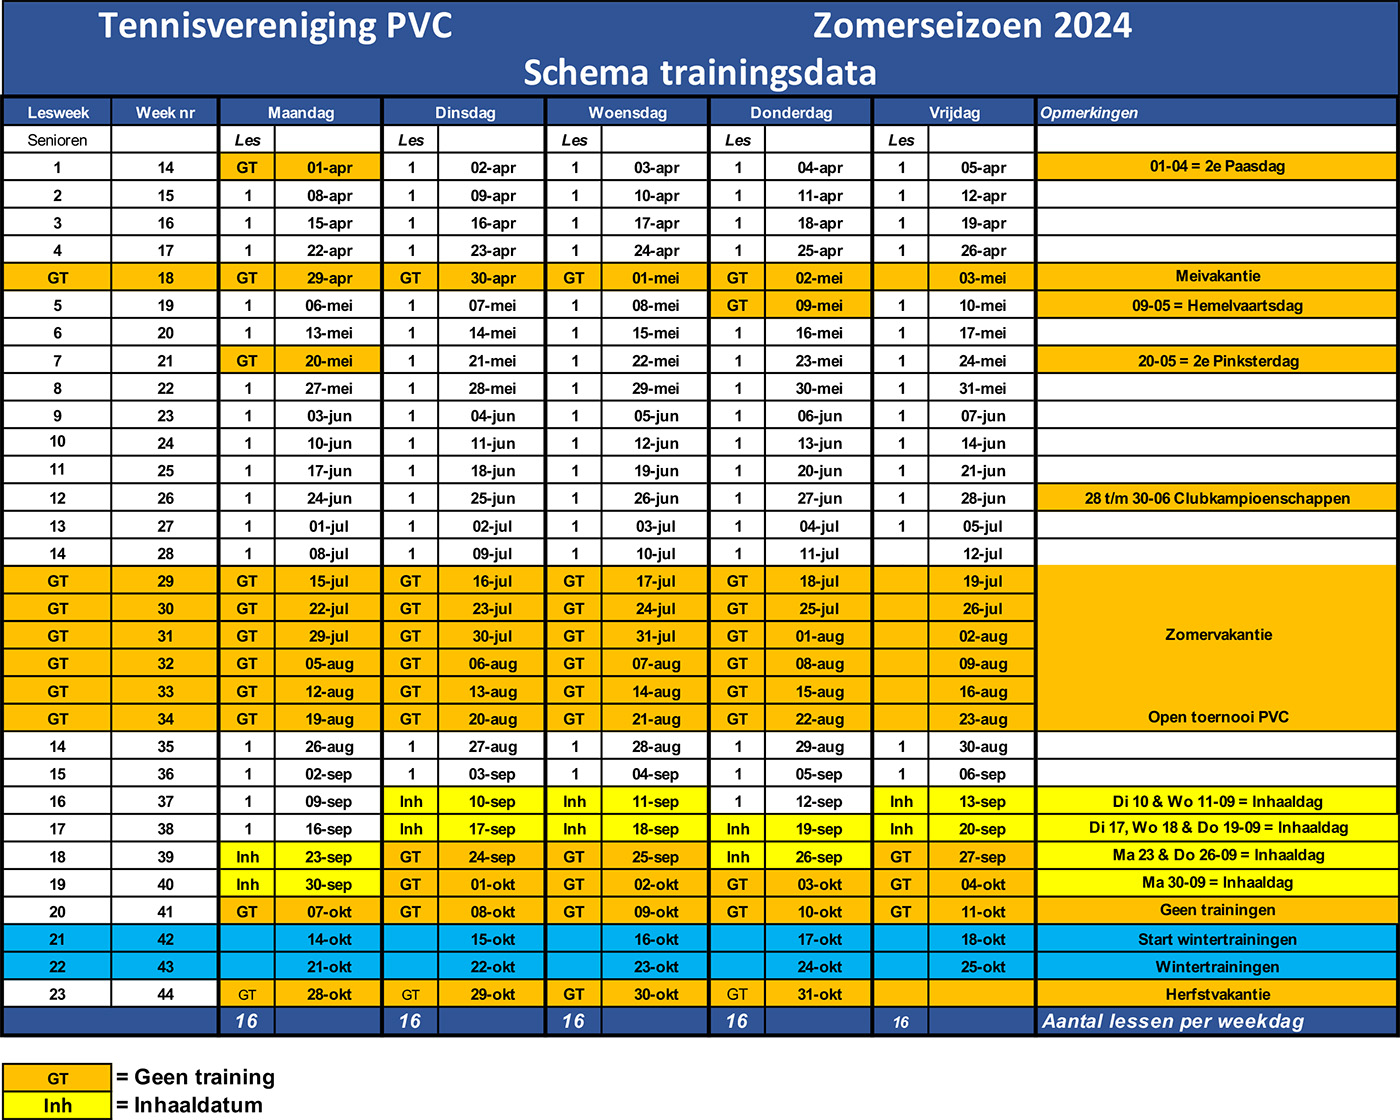 PVC - Trainingsdata - 2023 zomer